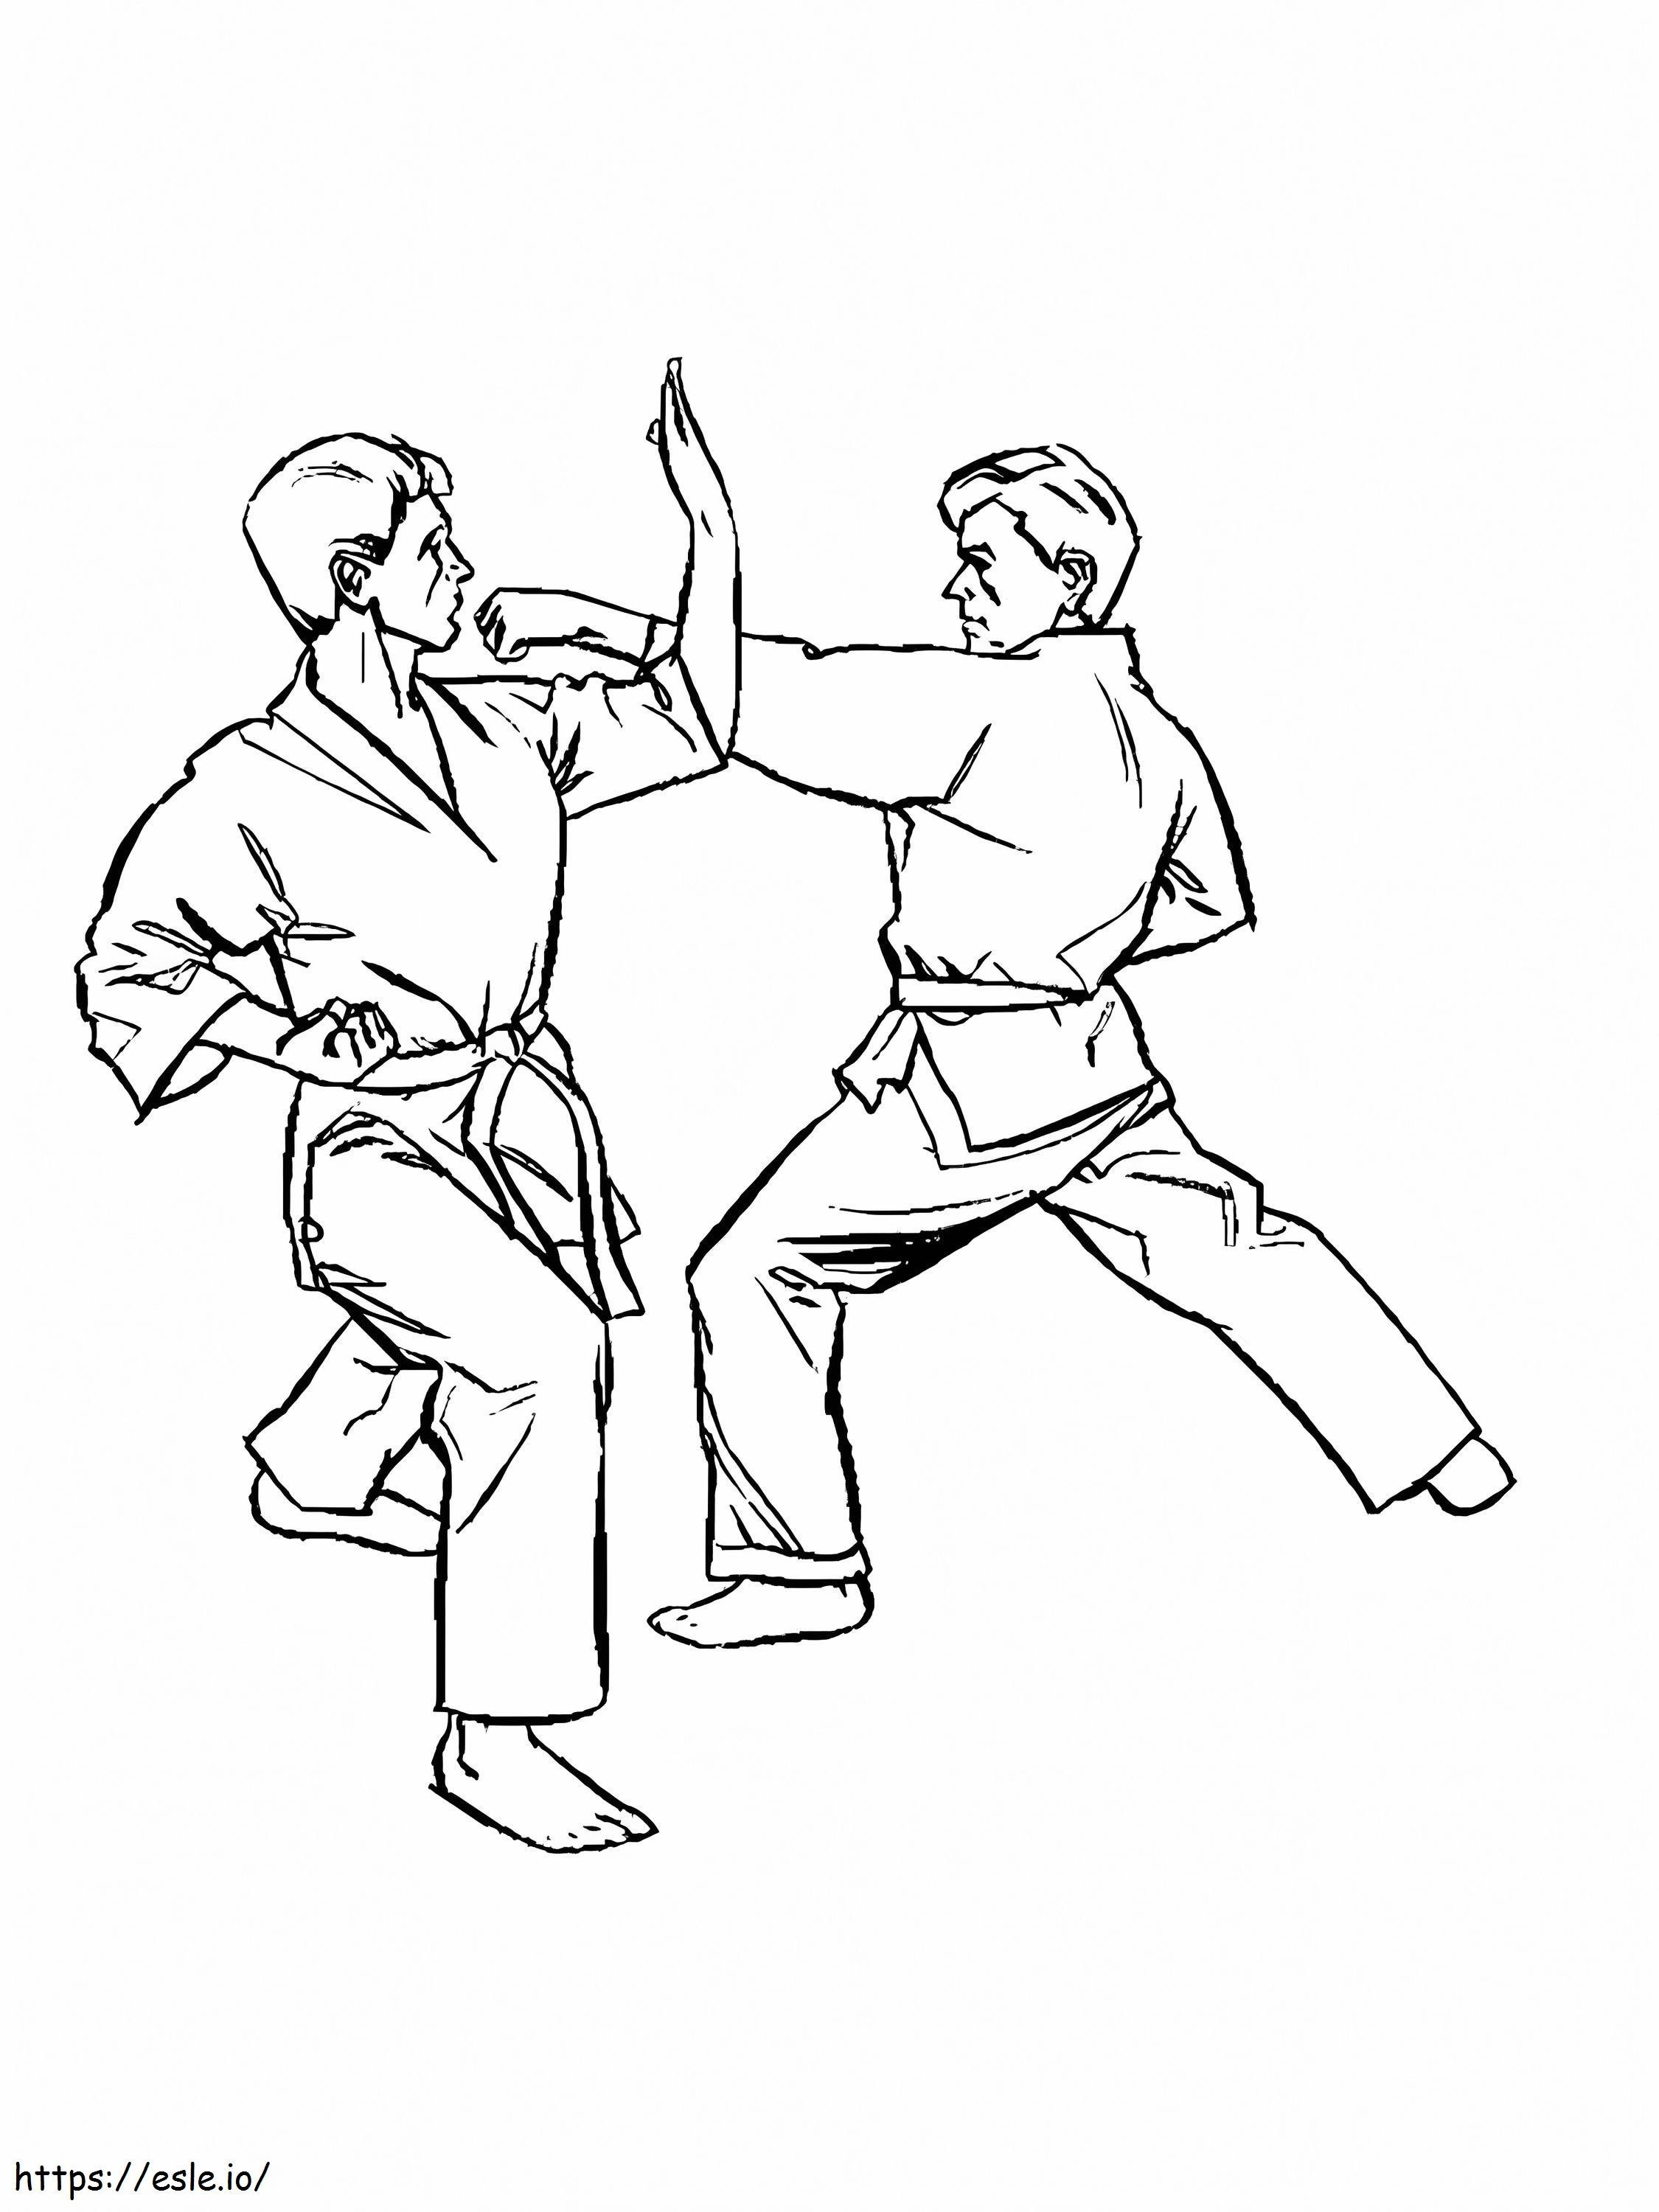 Print Karate coloring page